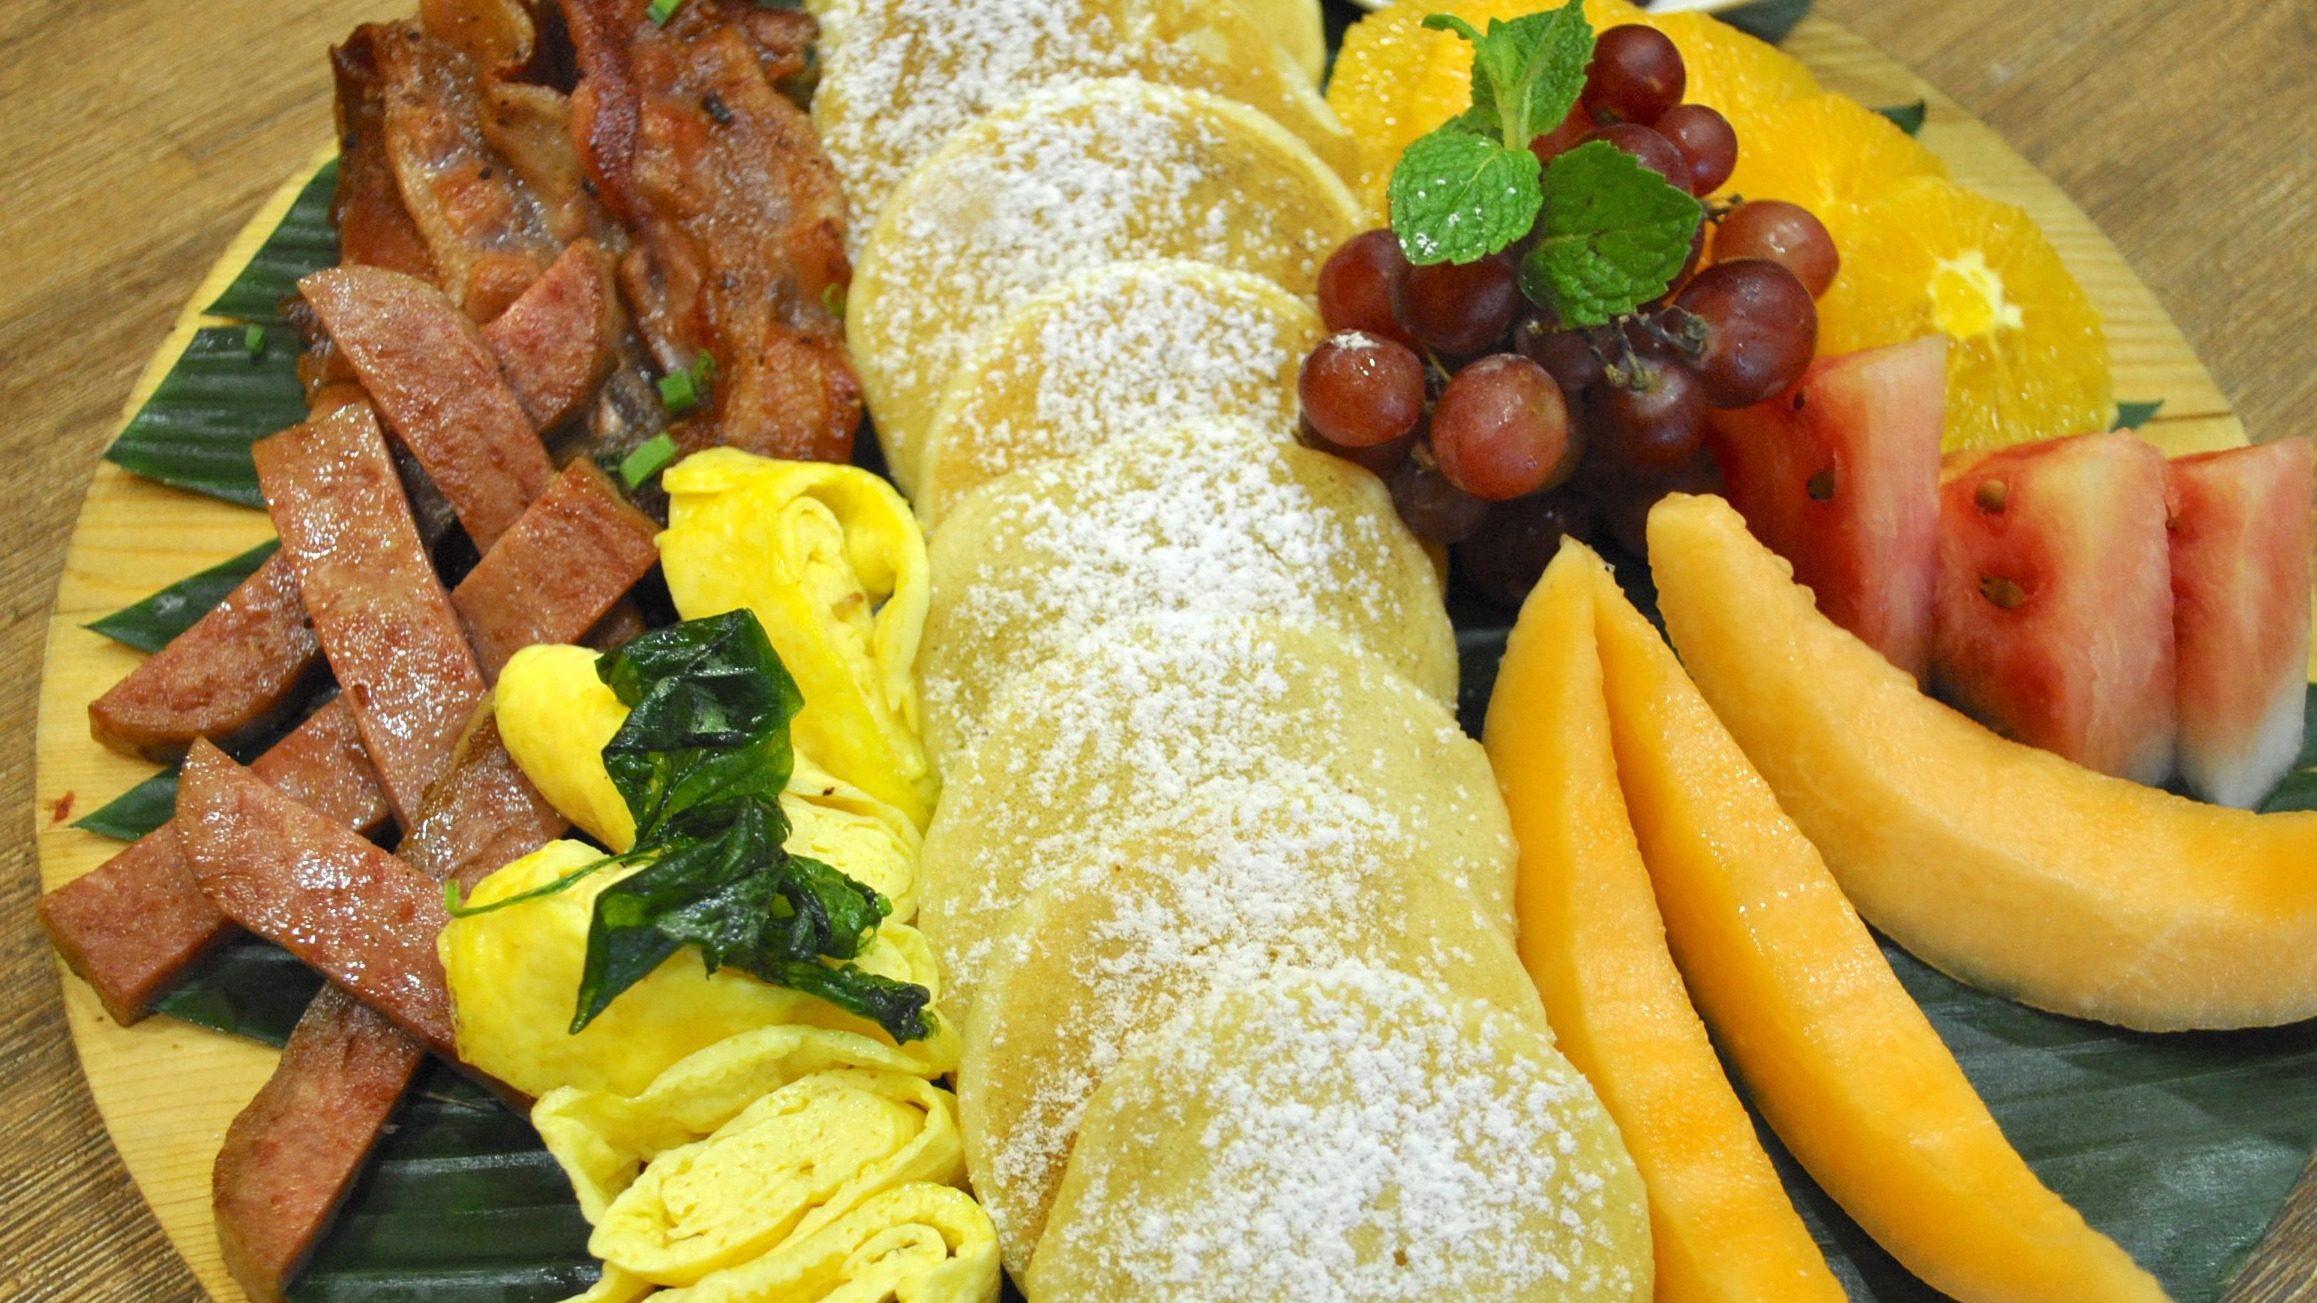 Menu, prices: Kanto Freestyle Breakfast opens new BGC branch